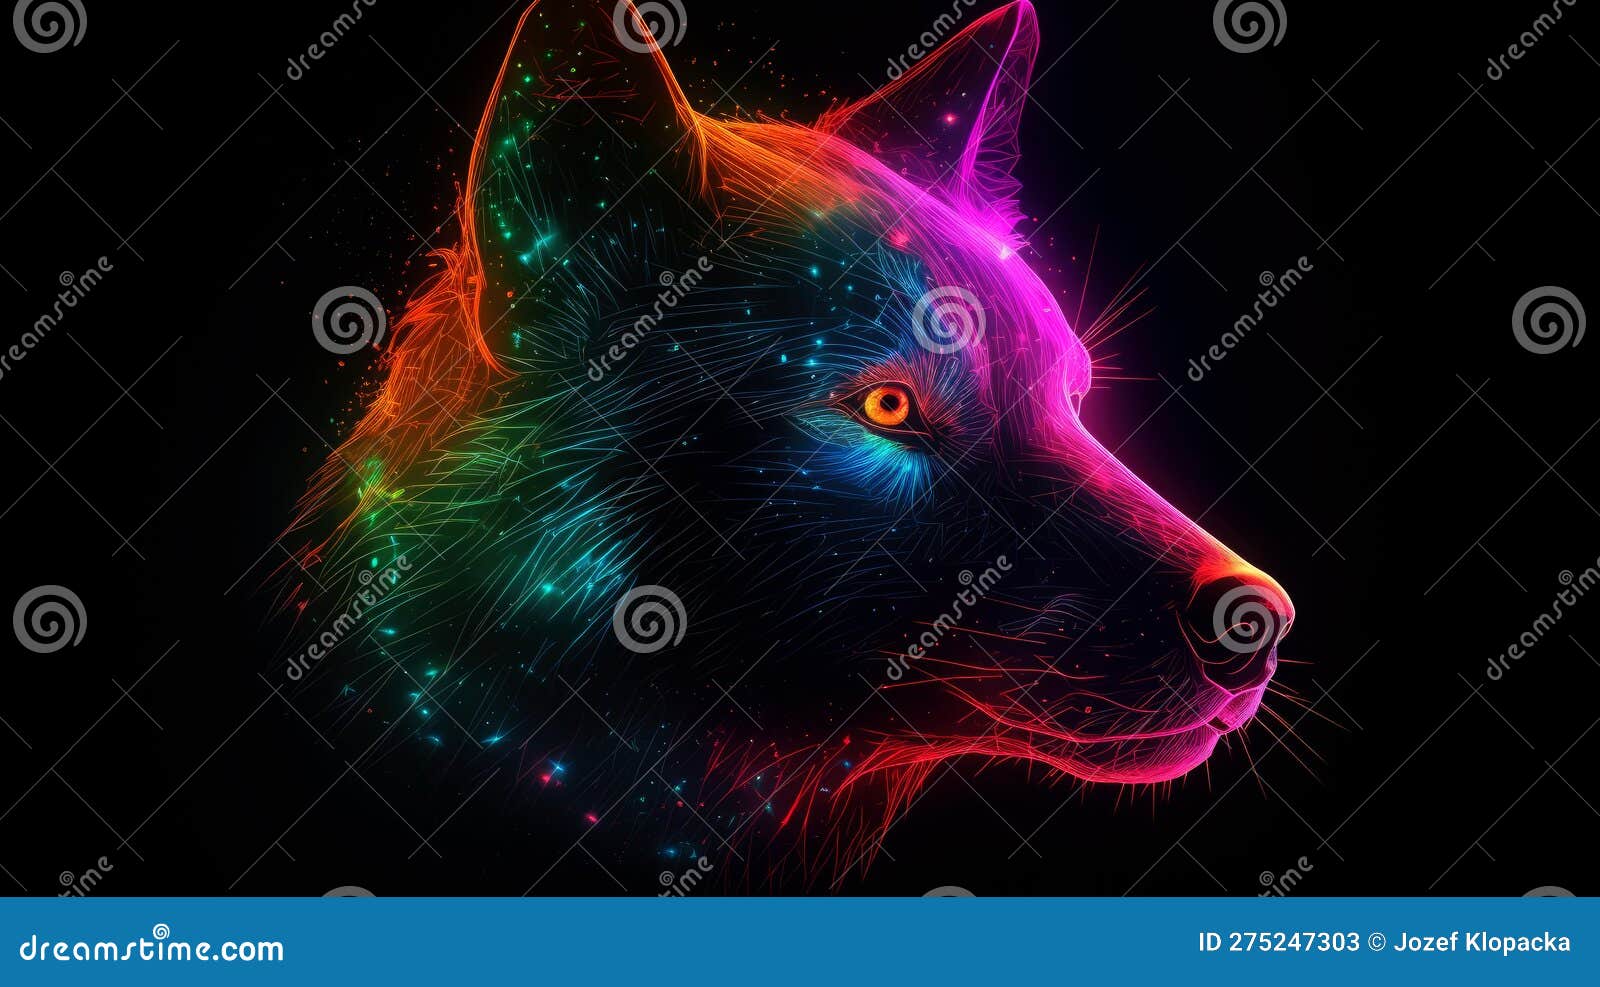 Big fantastic neon wolf in the sky fantasy Desktop wallpapers 1400x1050